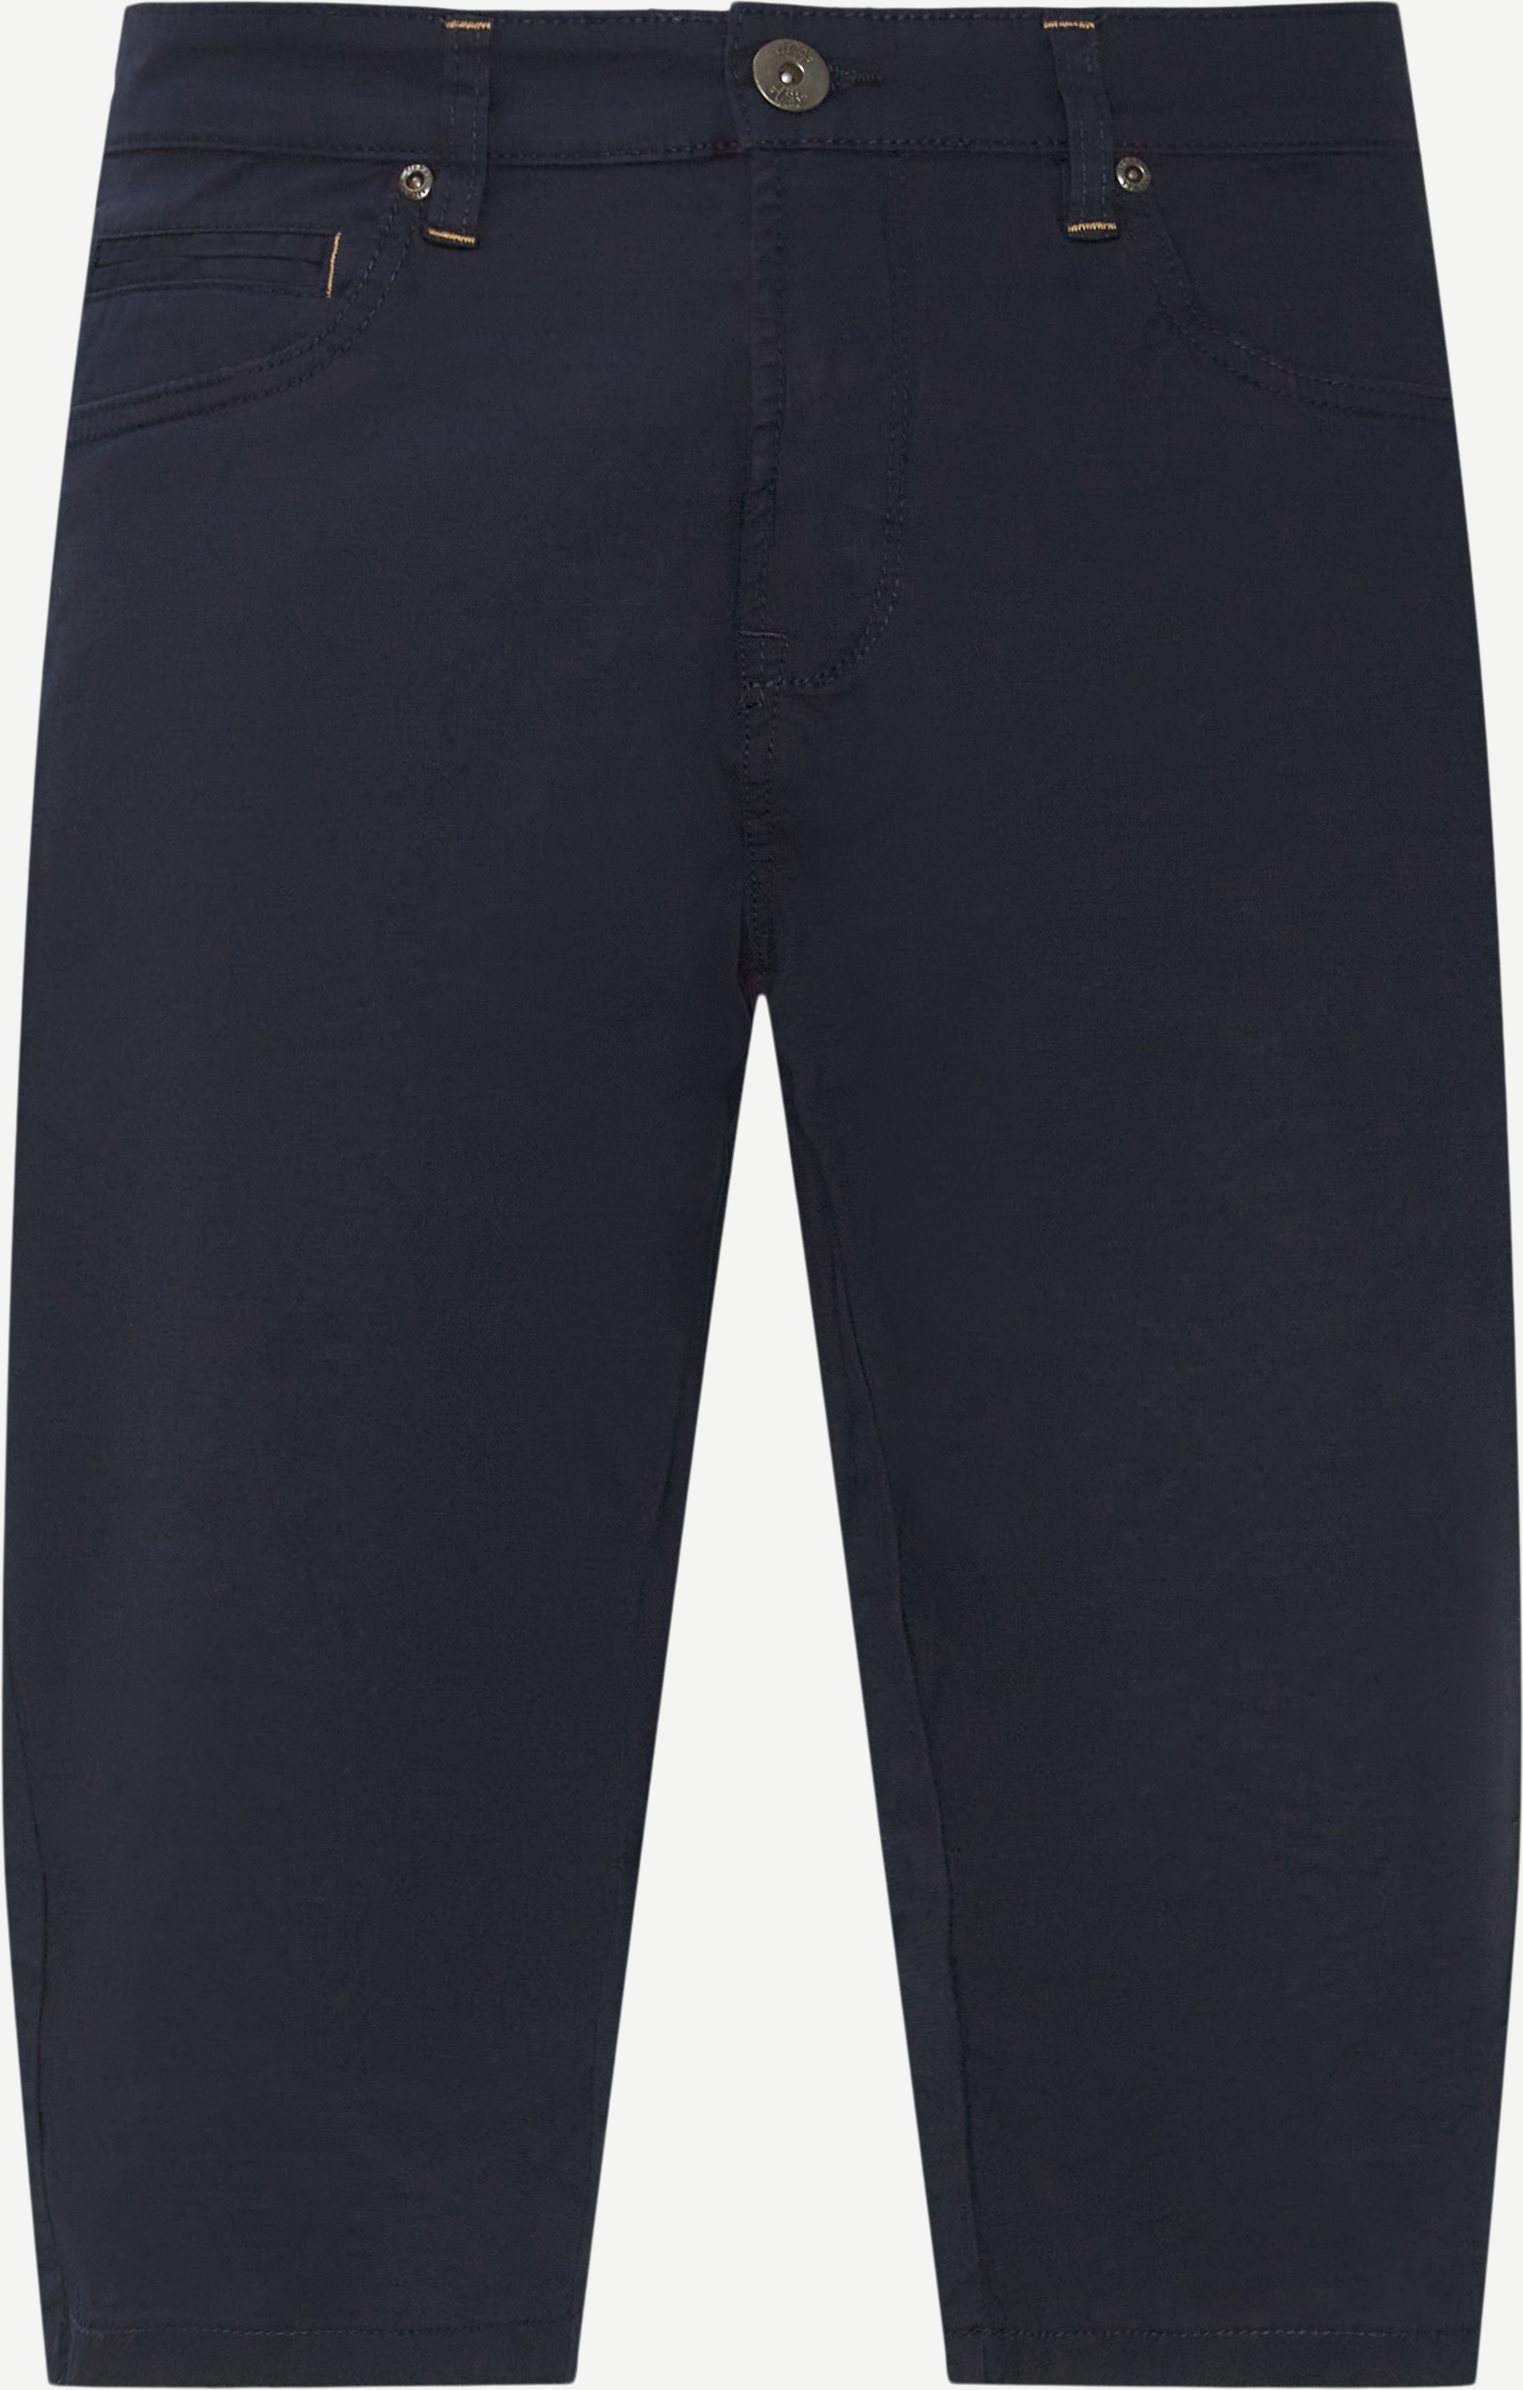 Klaus Cotton+ Knickers Shorts - Shorts - Regular fit - Blå